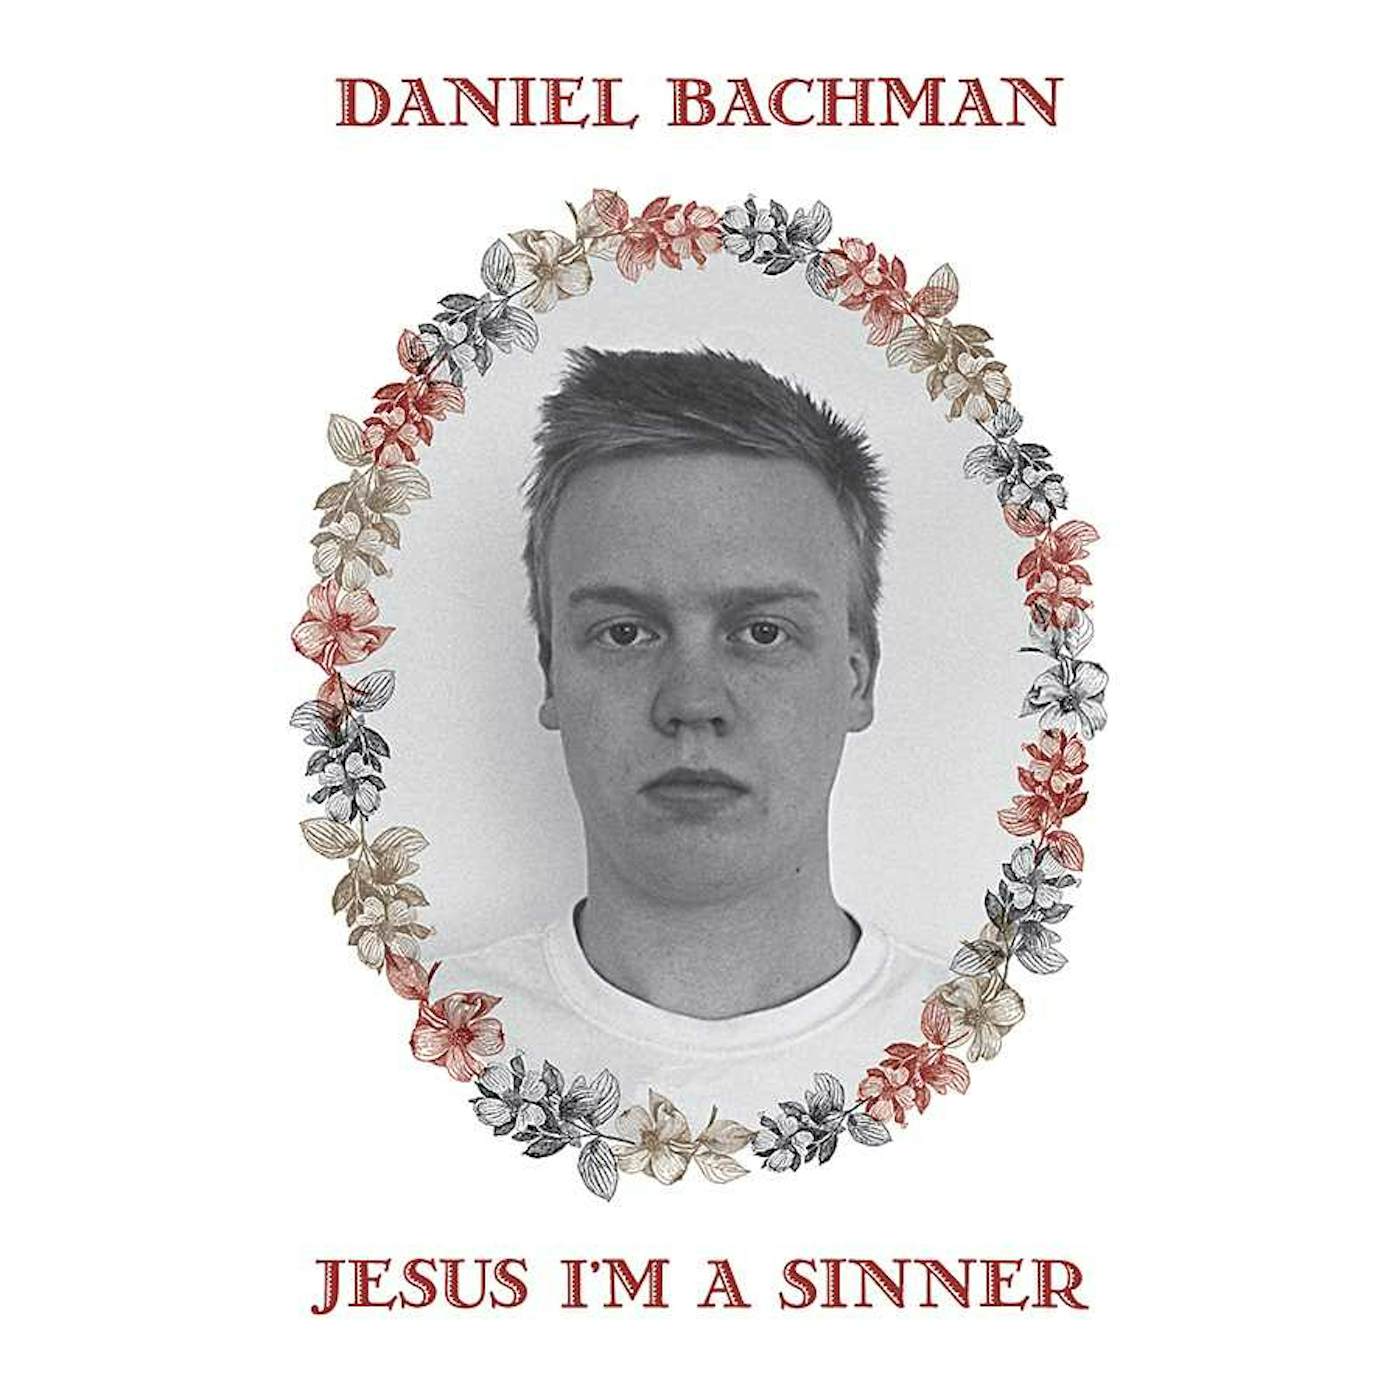 Daniel Bachman Jesus I'm a Sinner Vinyl Record